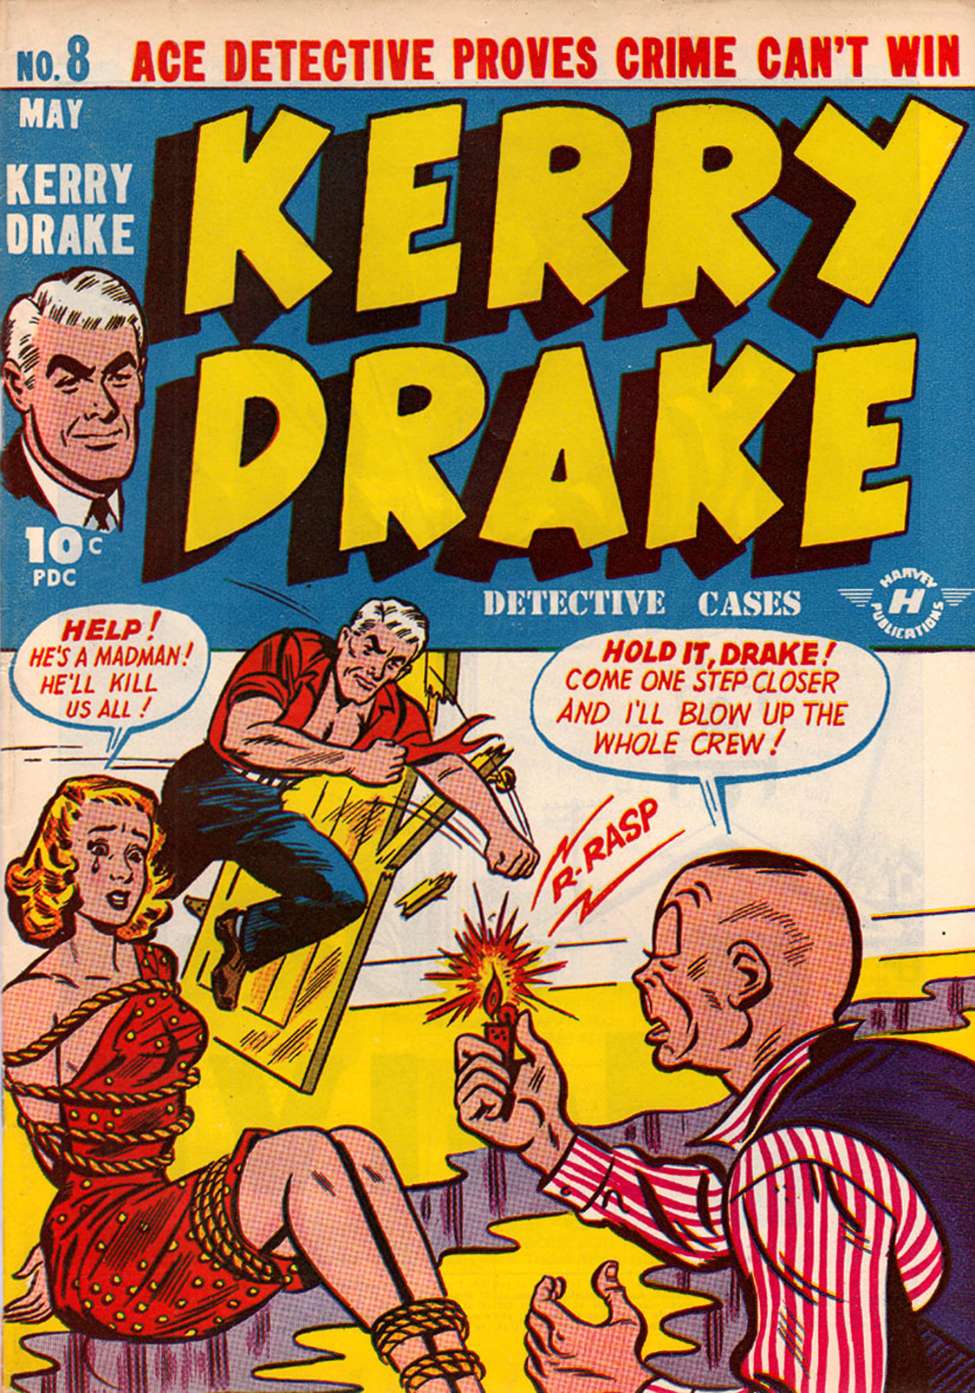 Kerry Drake #8, Harvey